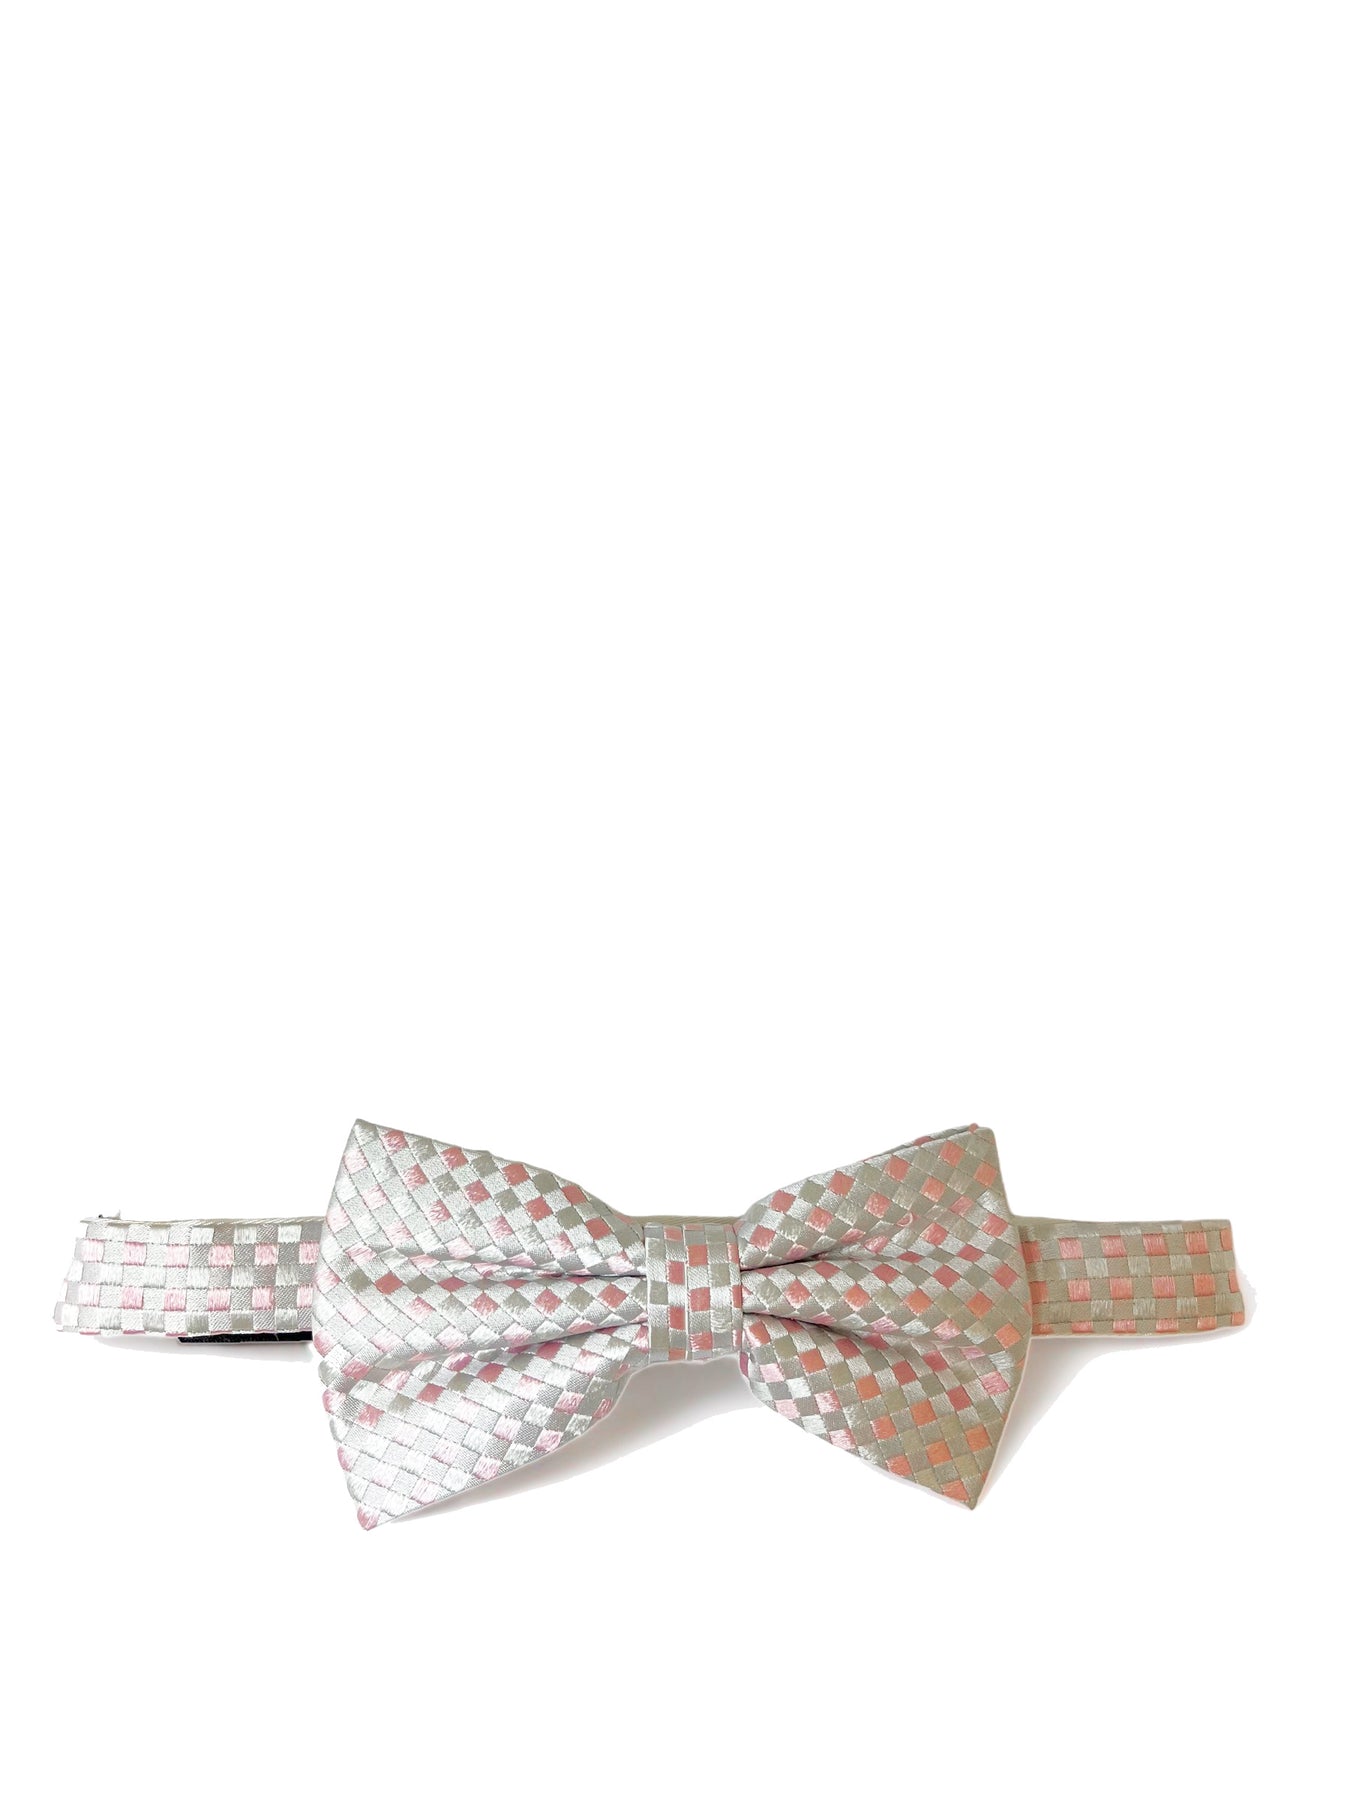 White Bow Tie, Crystal Bow Tie, Silver Rhinestones Bow Tie, White  Rhinestone Cummerbund pocket Square Bow Tie CK Bow Tie 